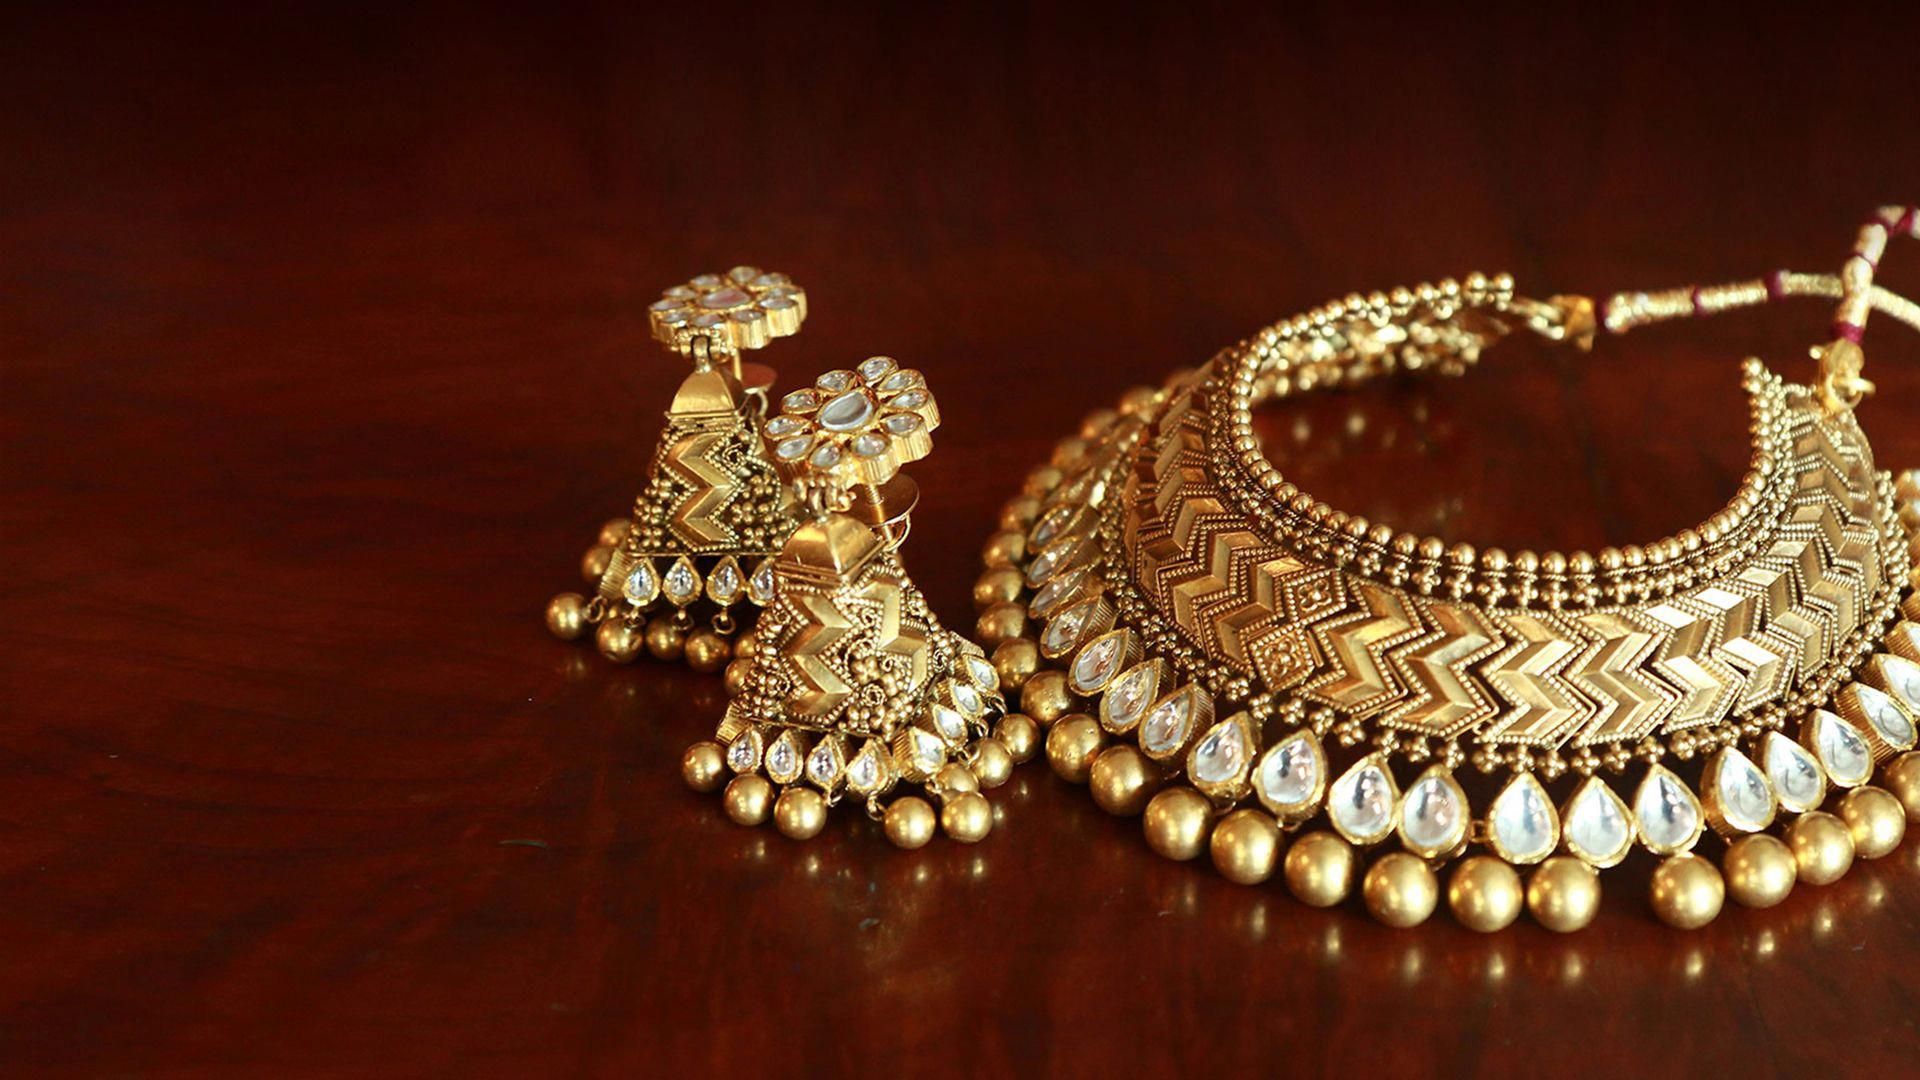 Native American Jewelry id:8713982051 #CartierJewelry. Bridal jewelry, Gold jewellery wallpaper, Gold jewelry